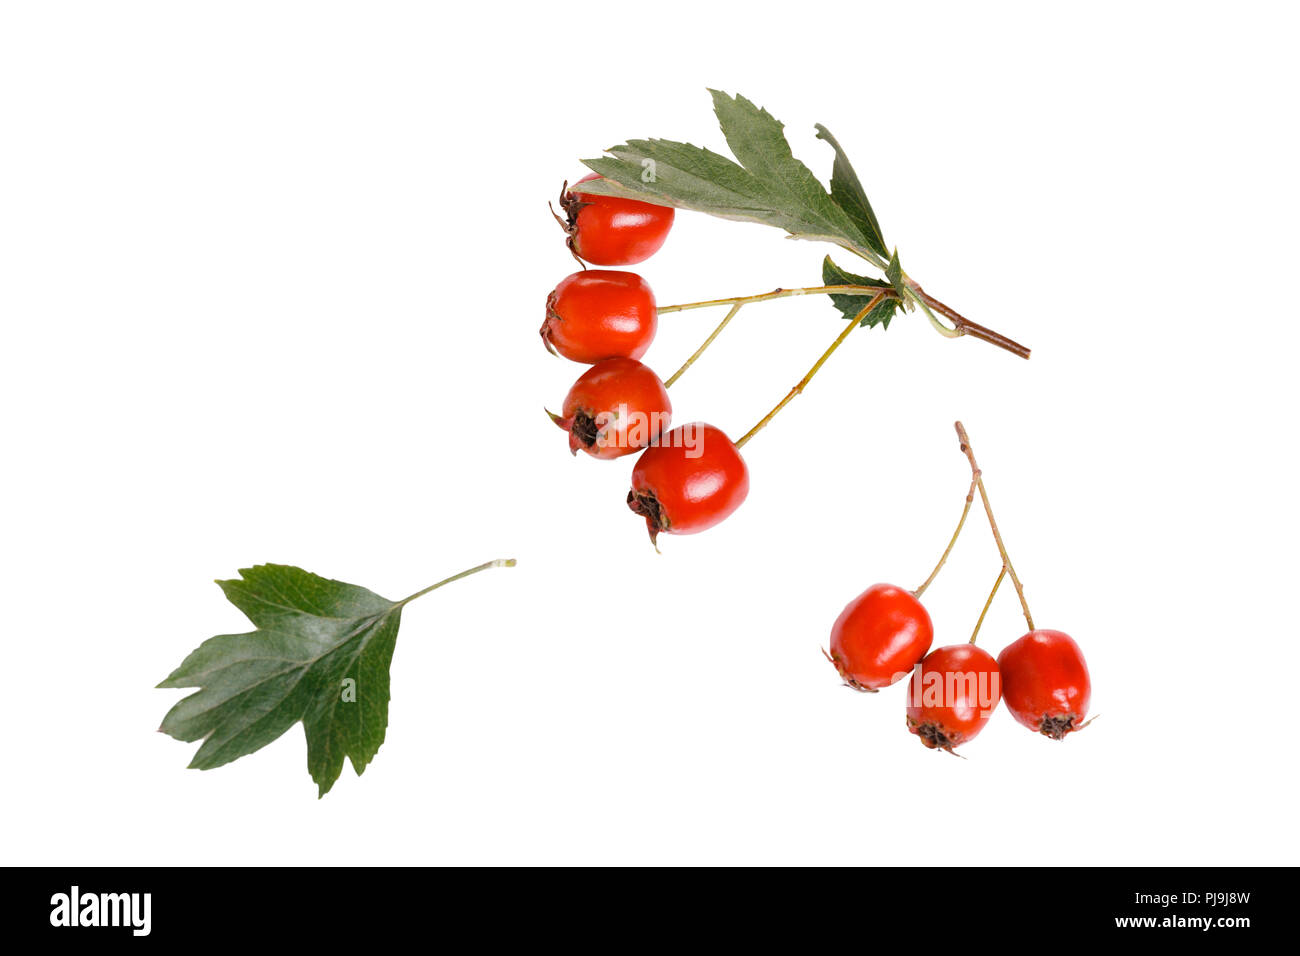 Hawthorn, Crataegus laevigata. Hawthorn berries with leaves isolated on white background Stock Photo